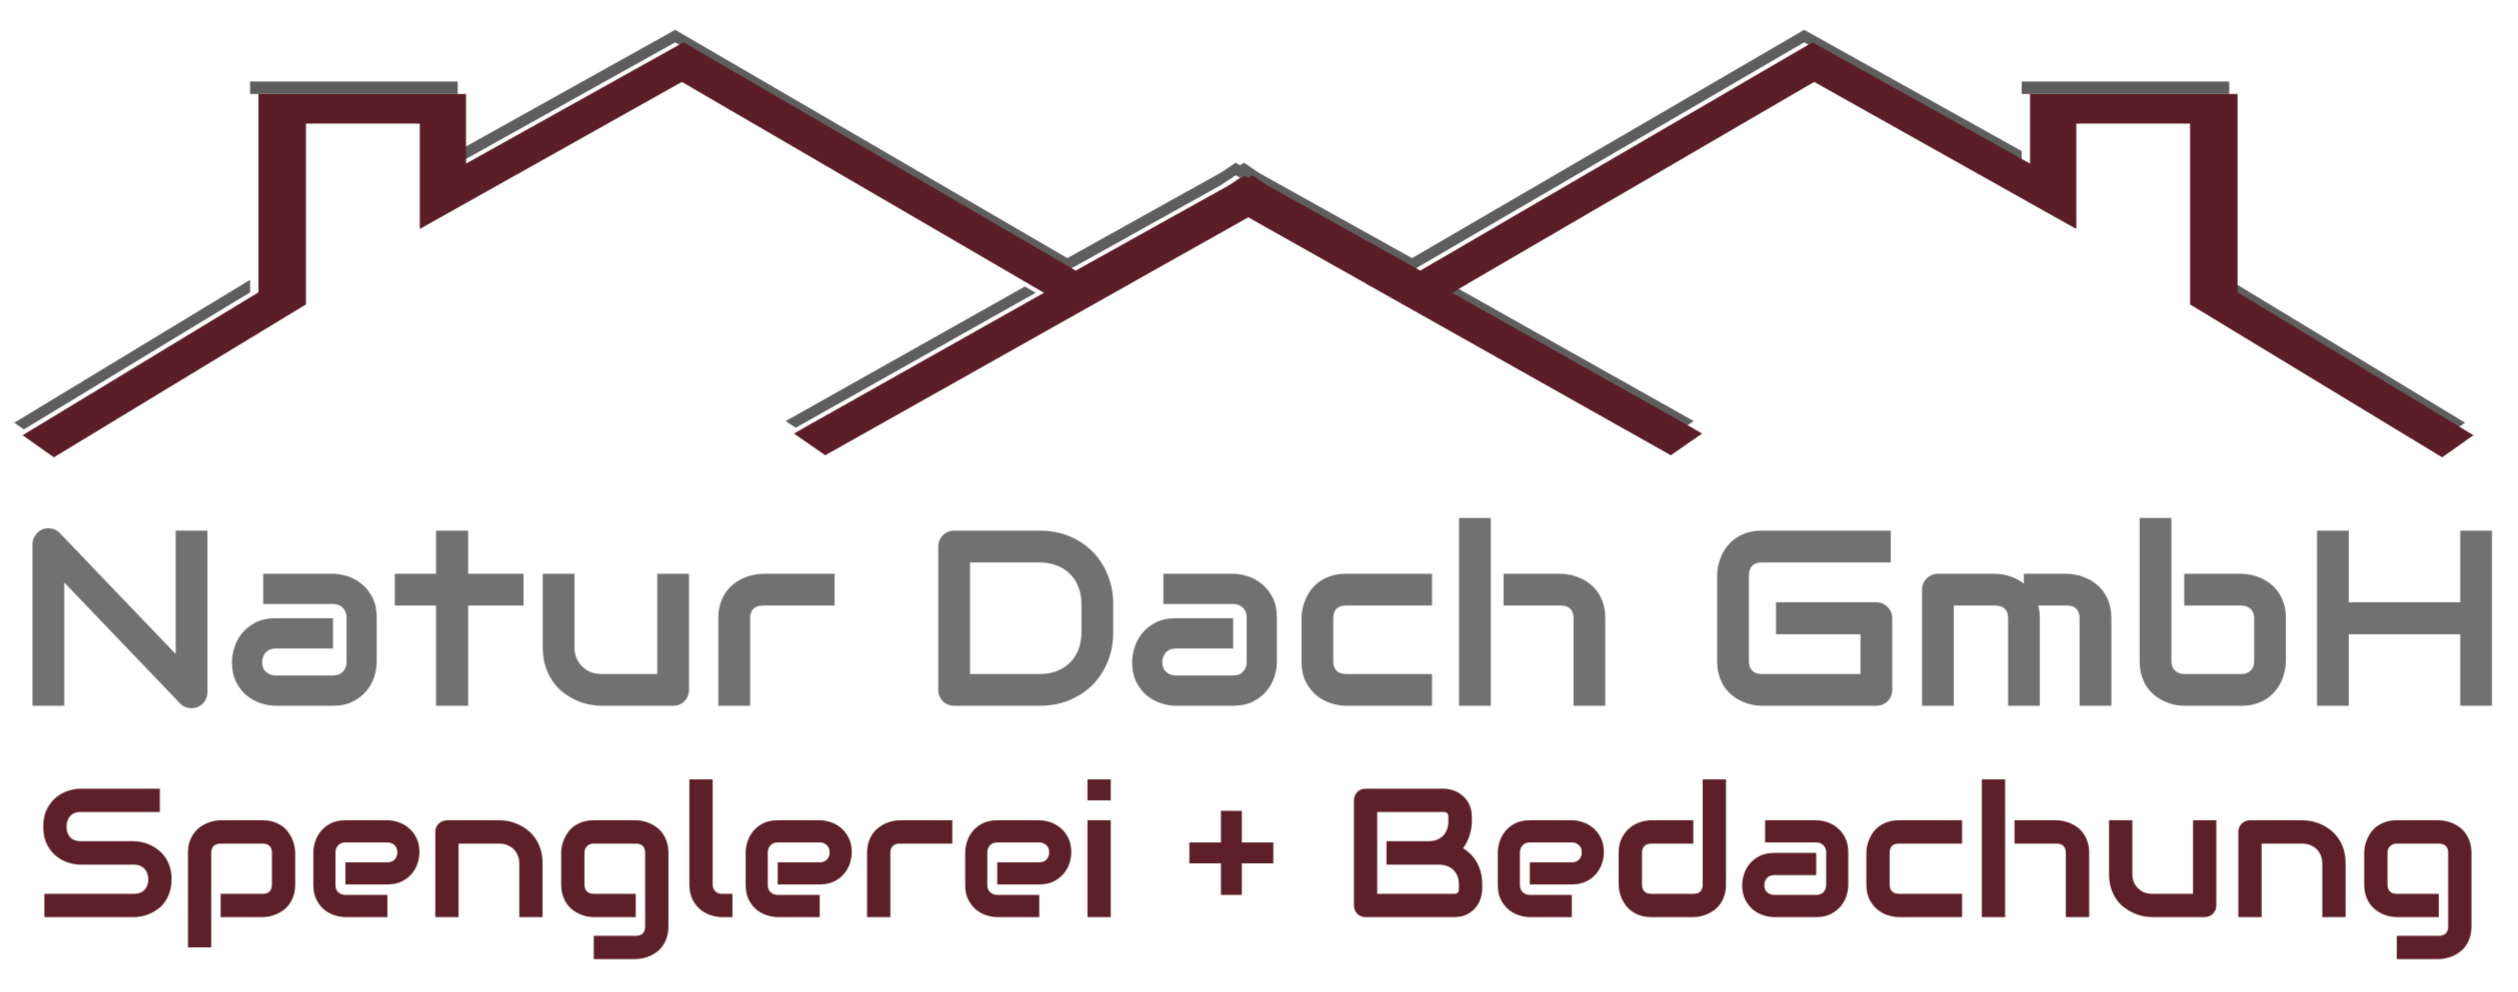 Natur Dach GmbH - Spenglerei + Bedachung